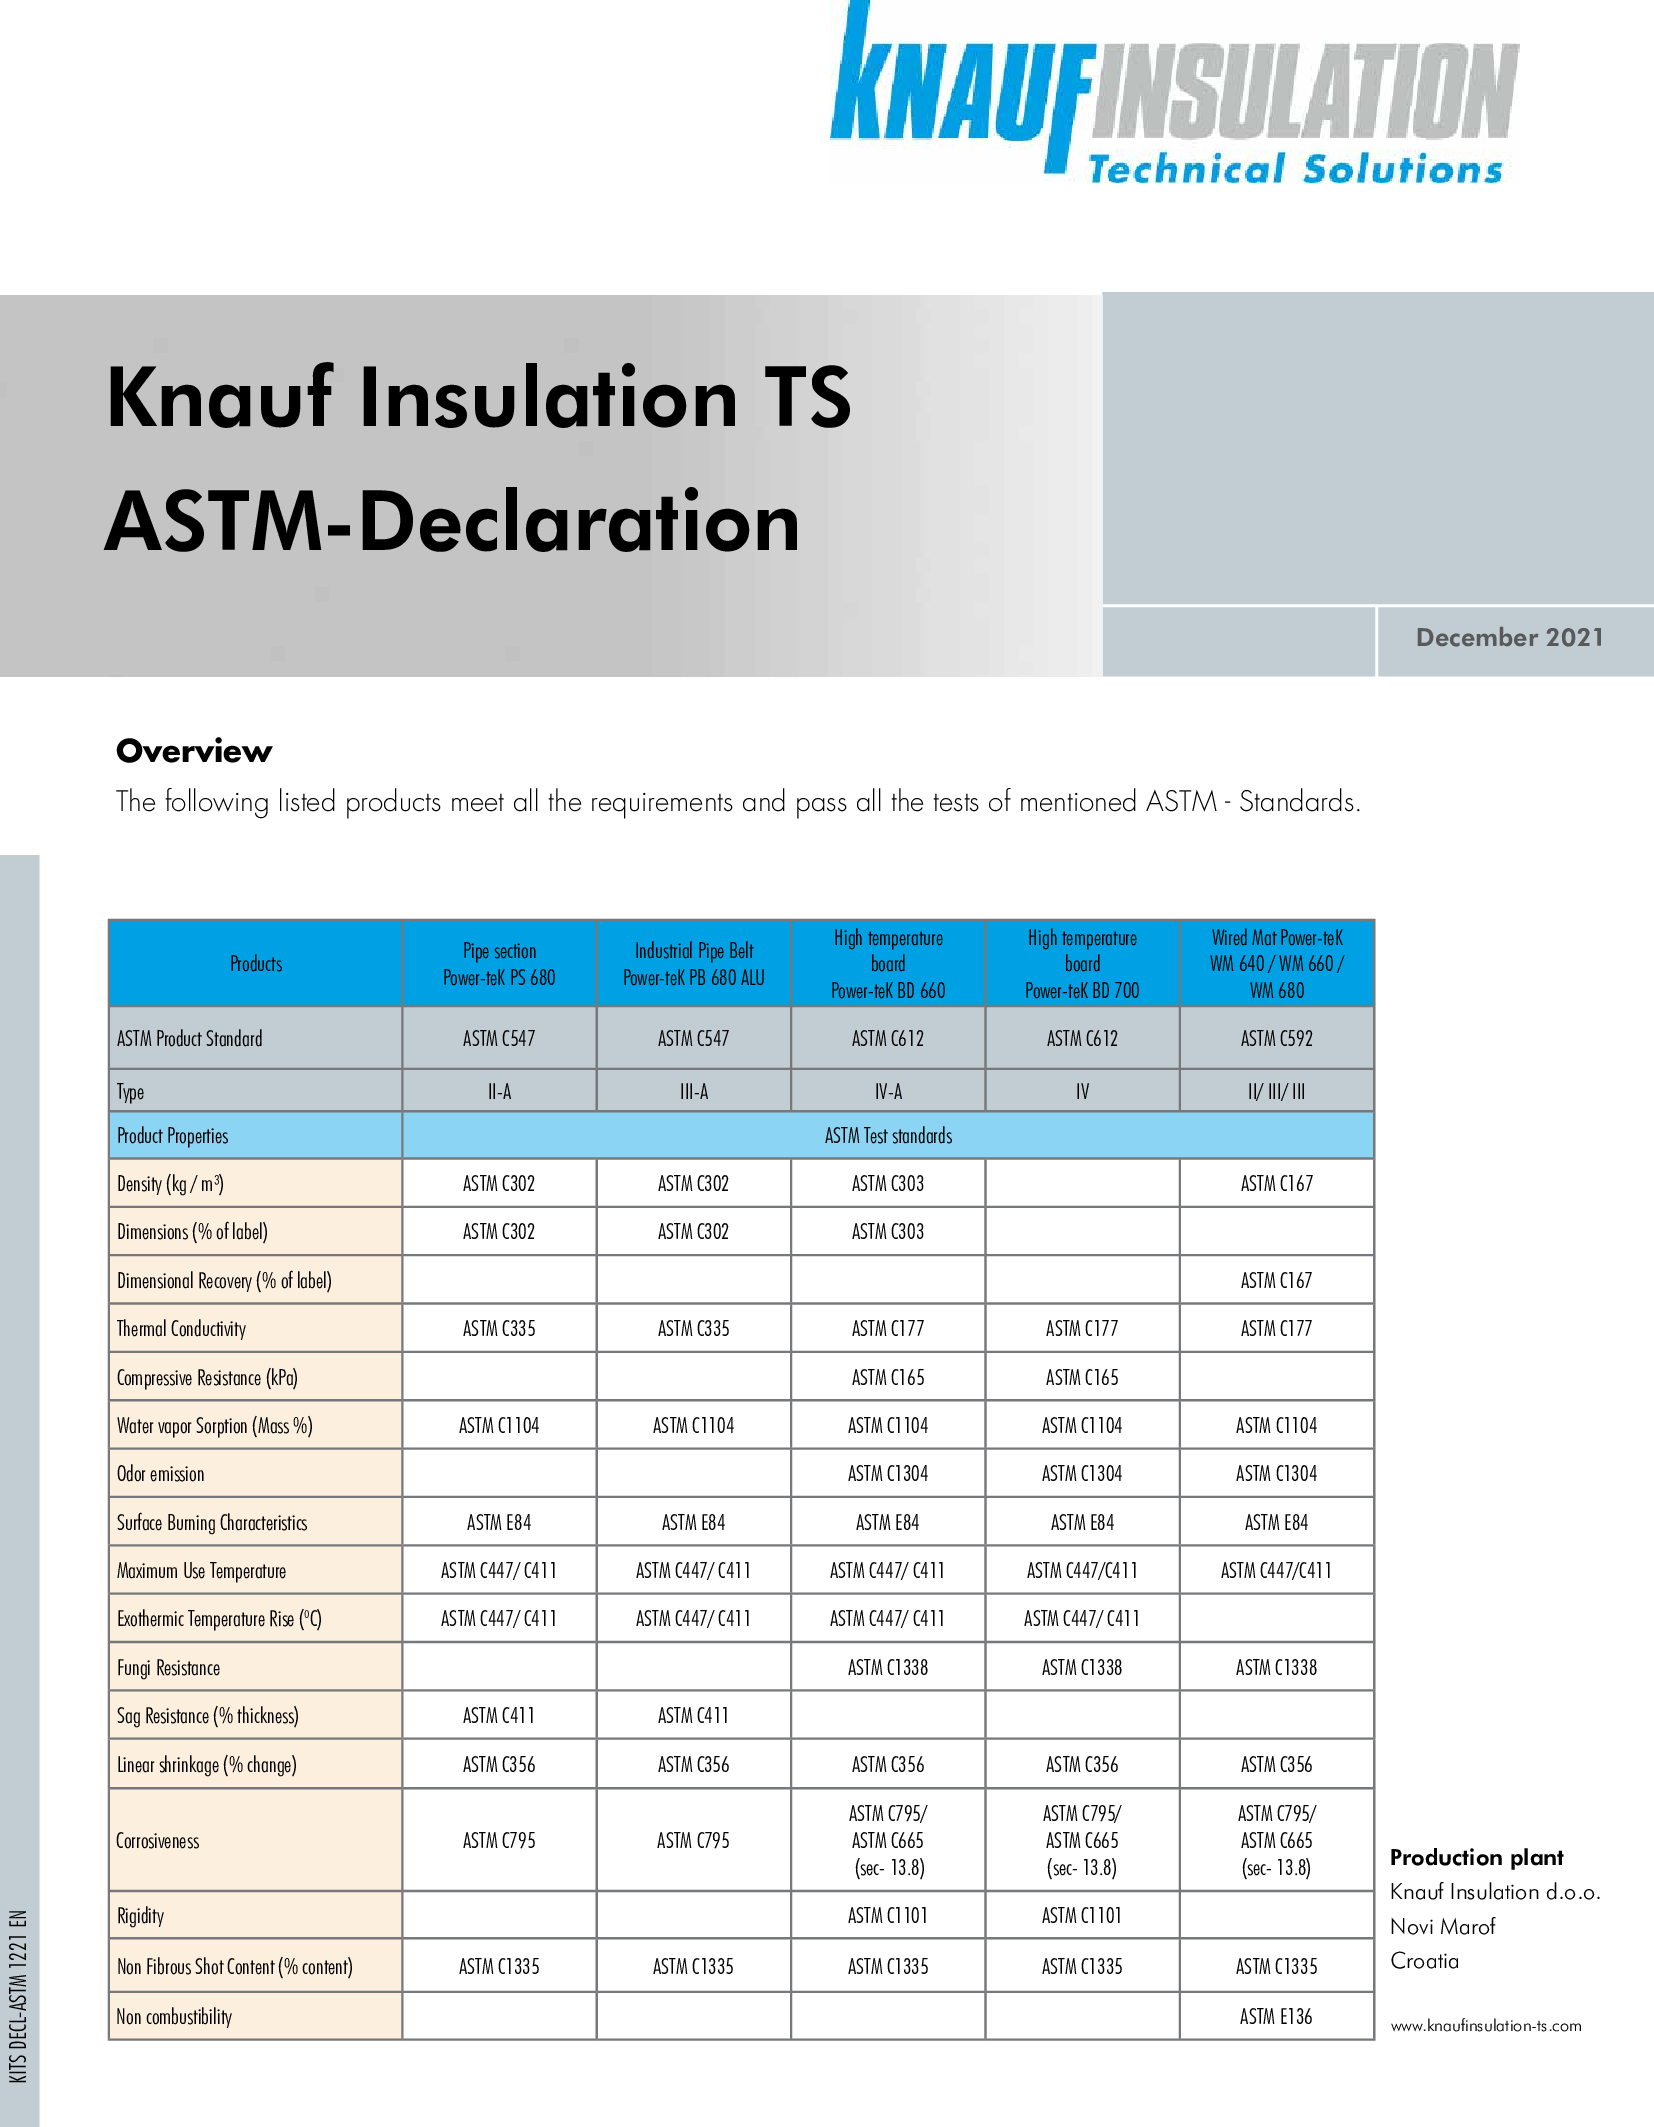 ASTM Declaration_ overview